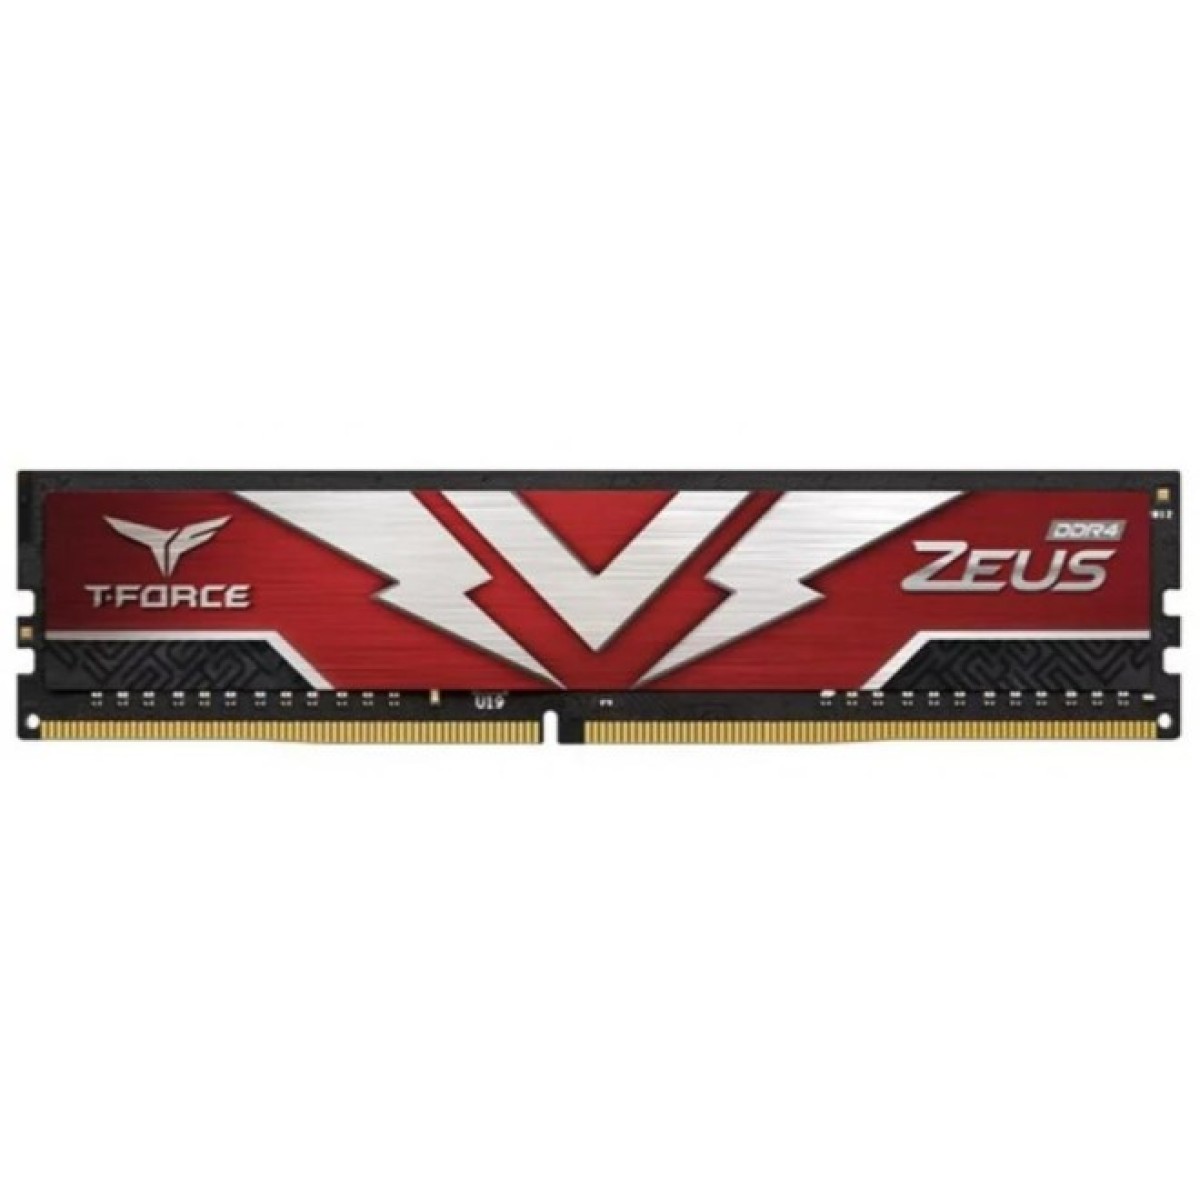 Модуль памяти для компьютера DDR4 16GB 3200 MHz T-Force Zeus Red Team (TTZD416G3200HC2001) 256_256.jpg